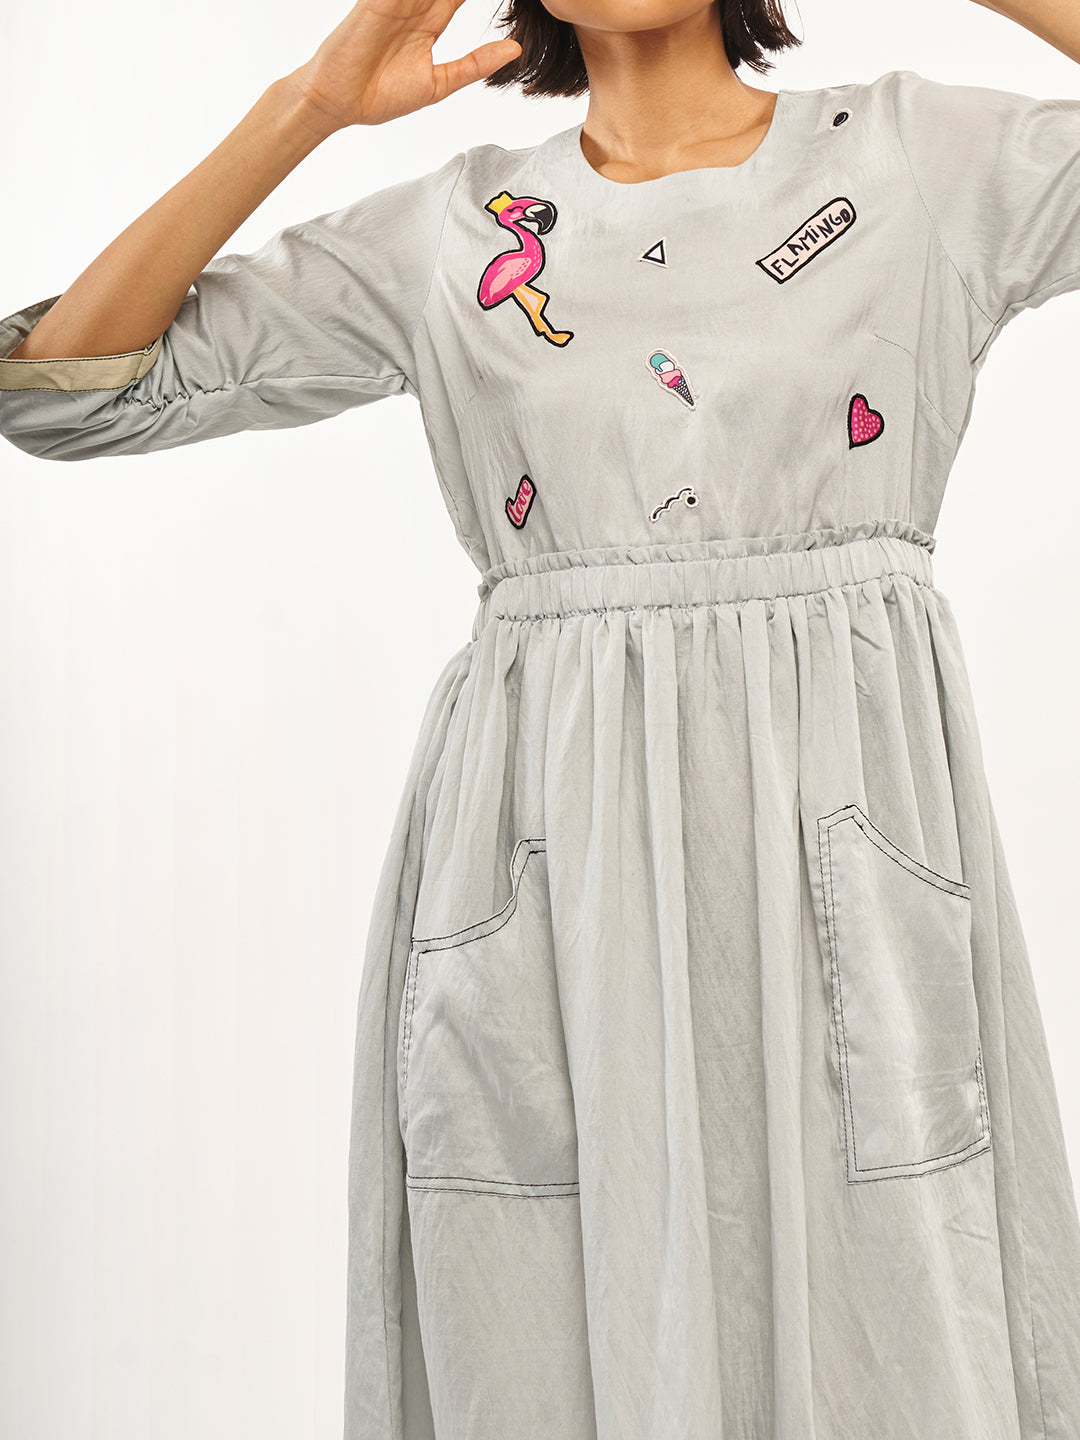 Flamingo Print Flared Dress - ARH458